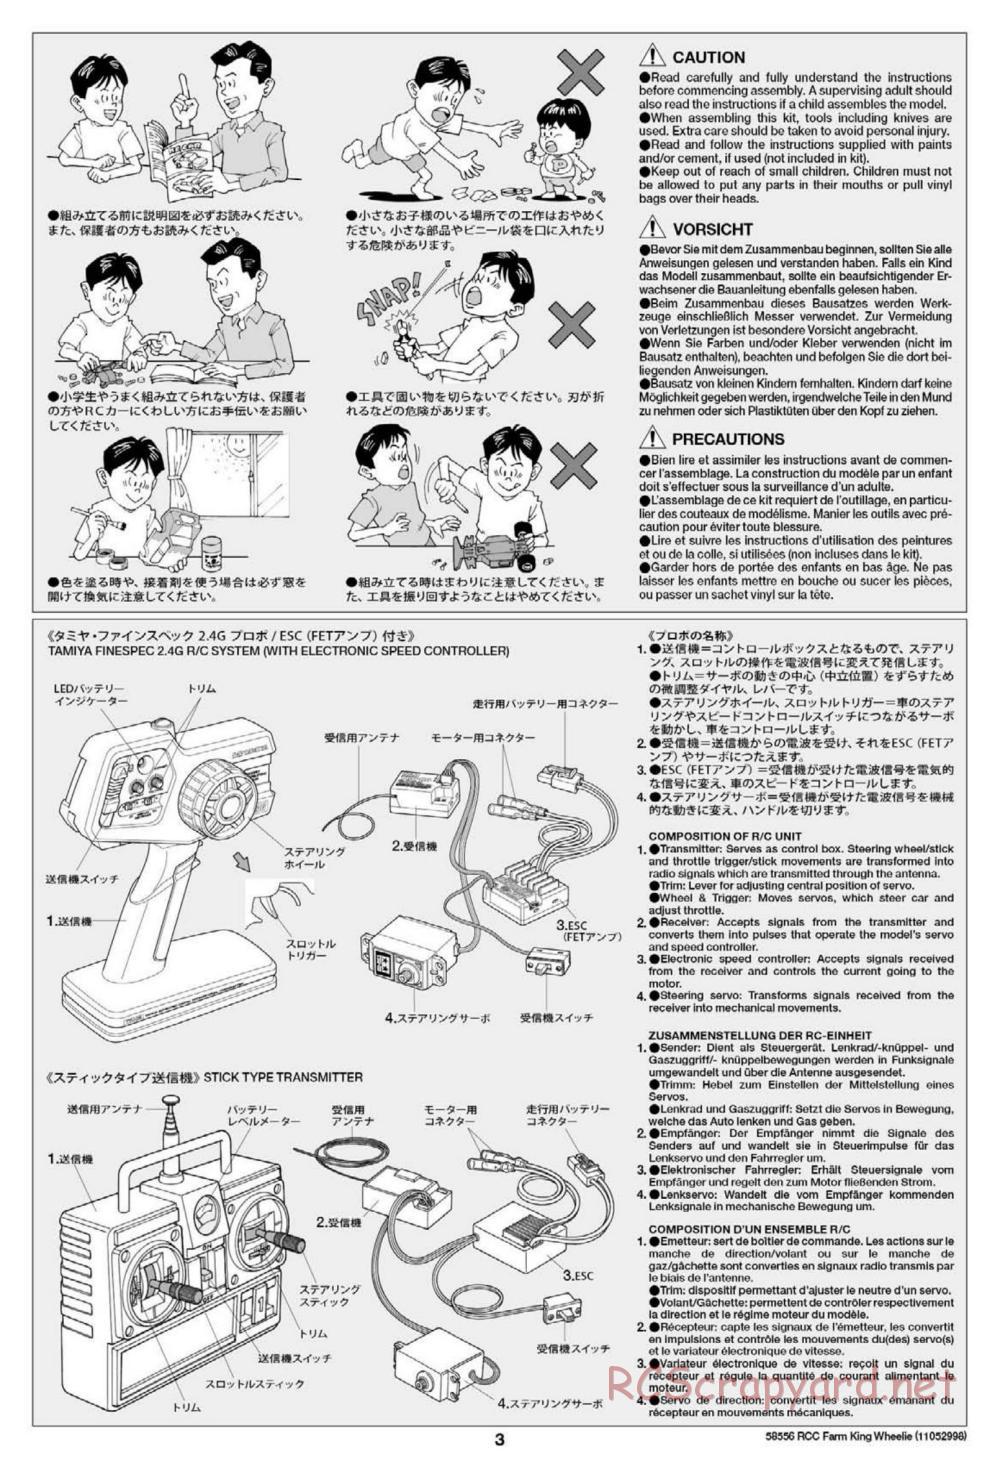 Tamiya - Farm King Wheelie Chassis - Manual - Page 3